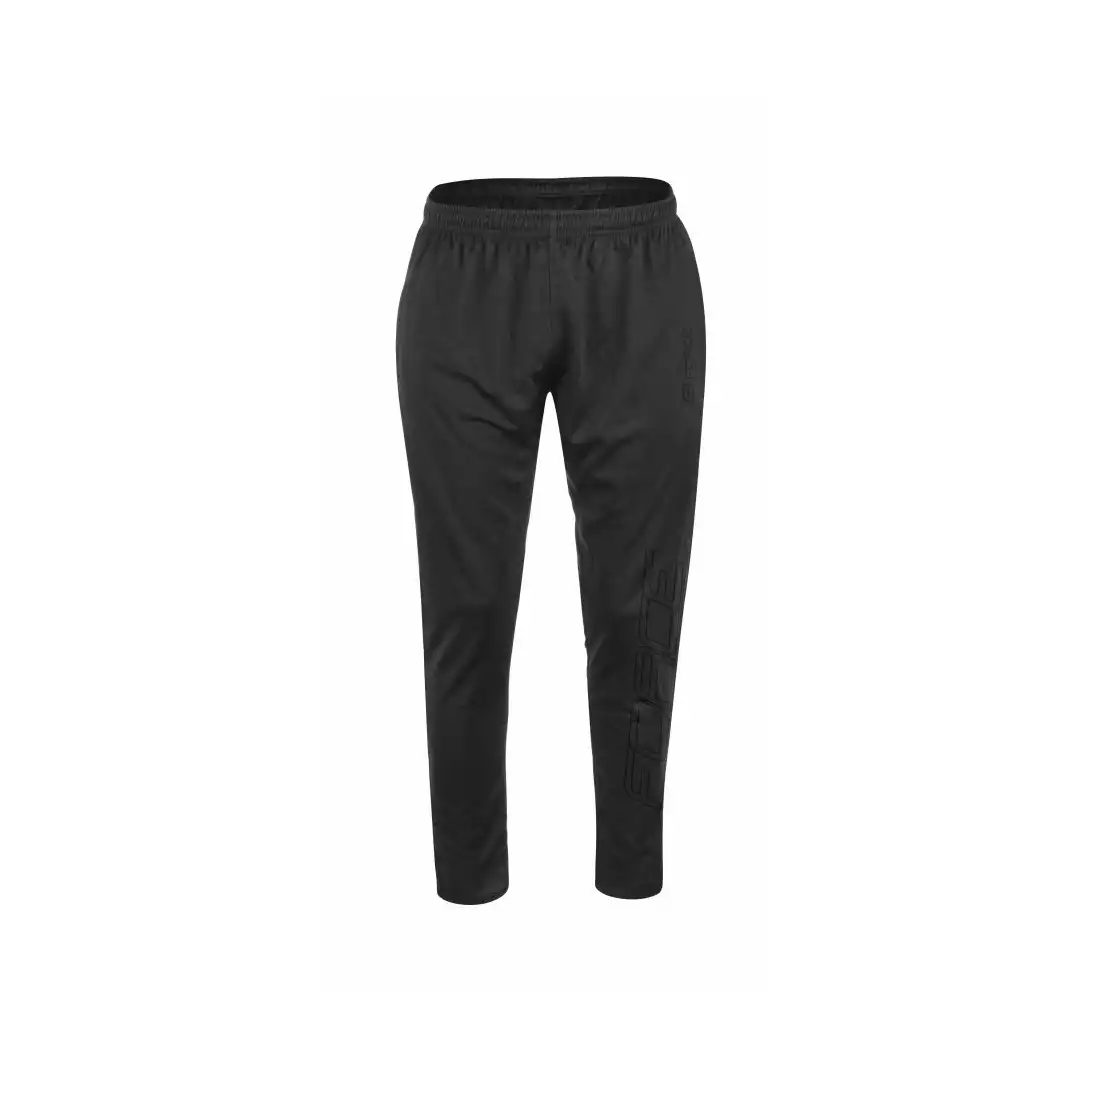 FORCE ROCKY/ADRIANA LOGO athletic shorts, black